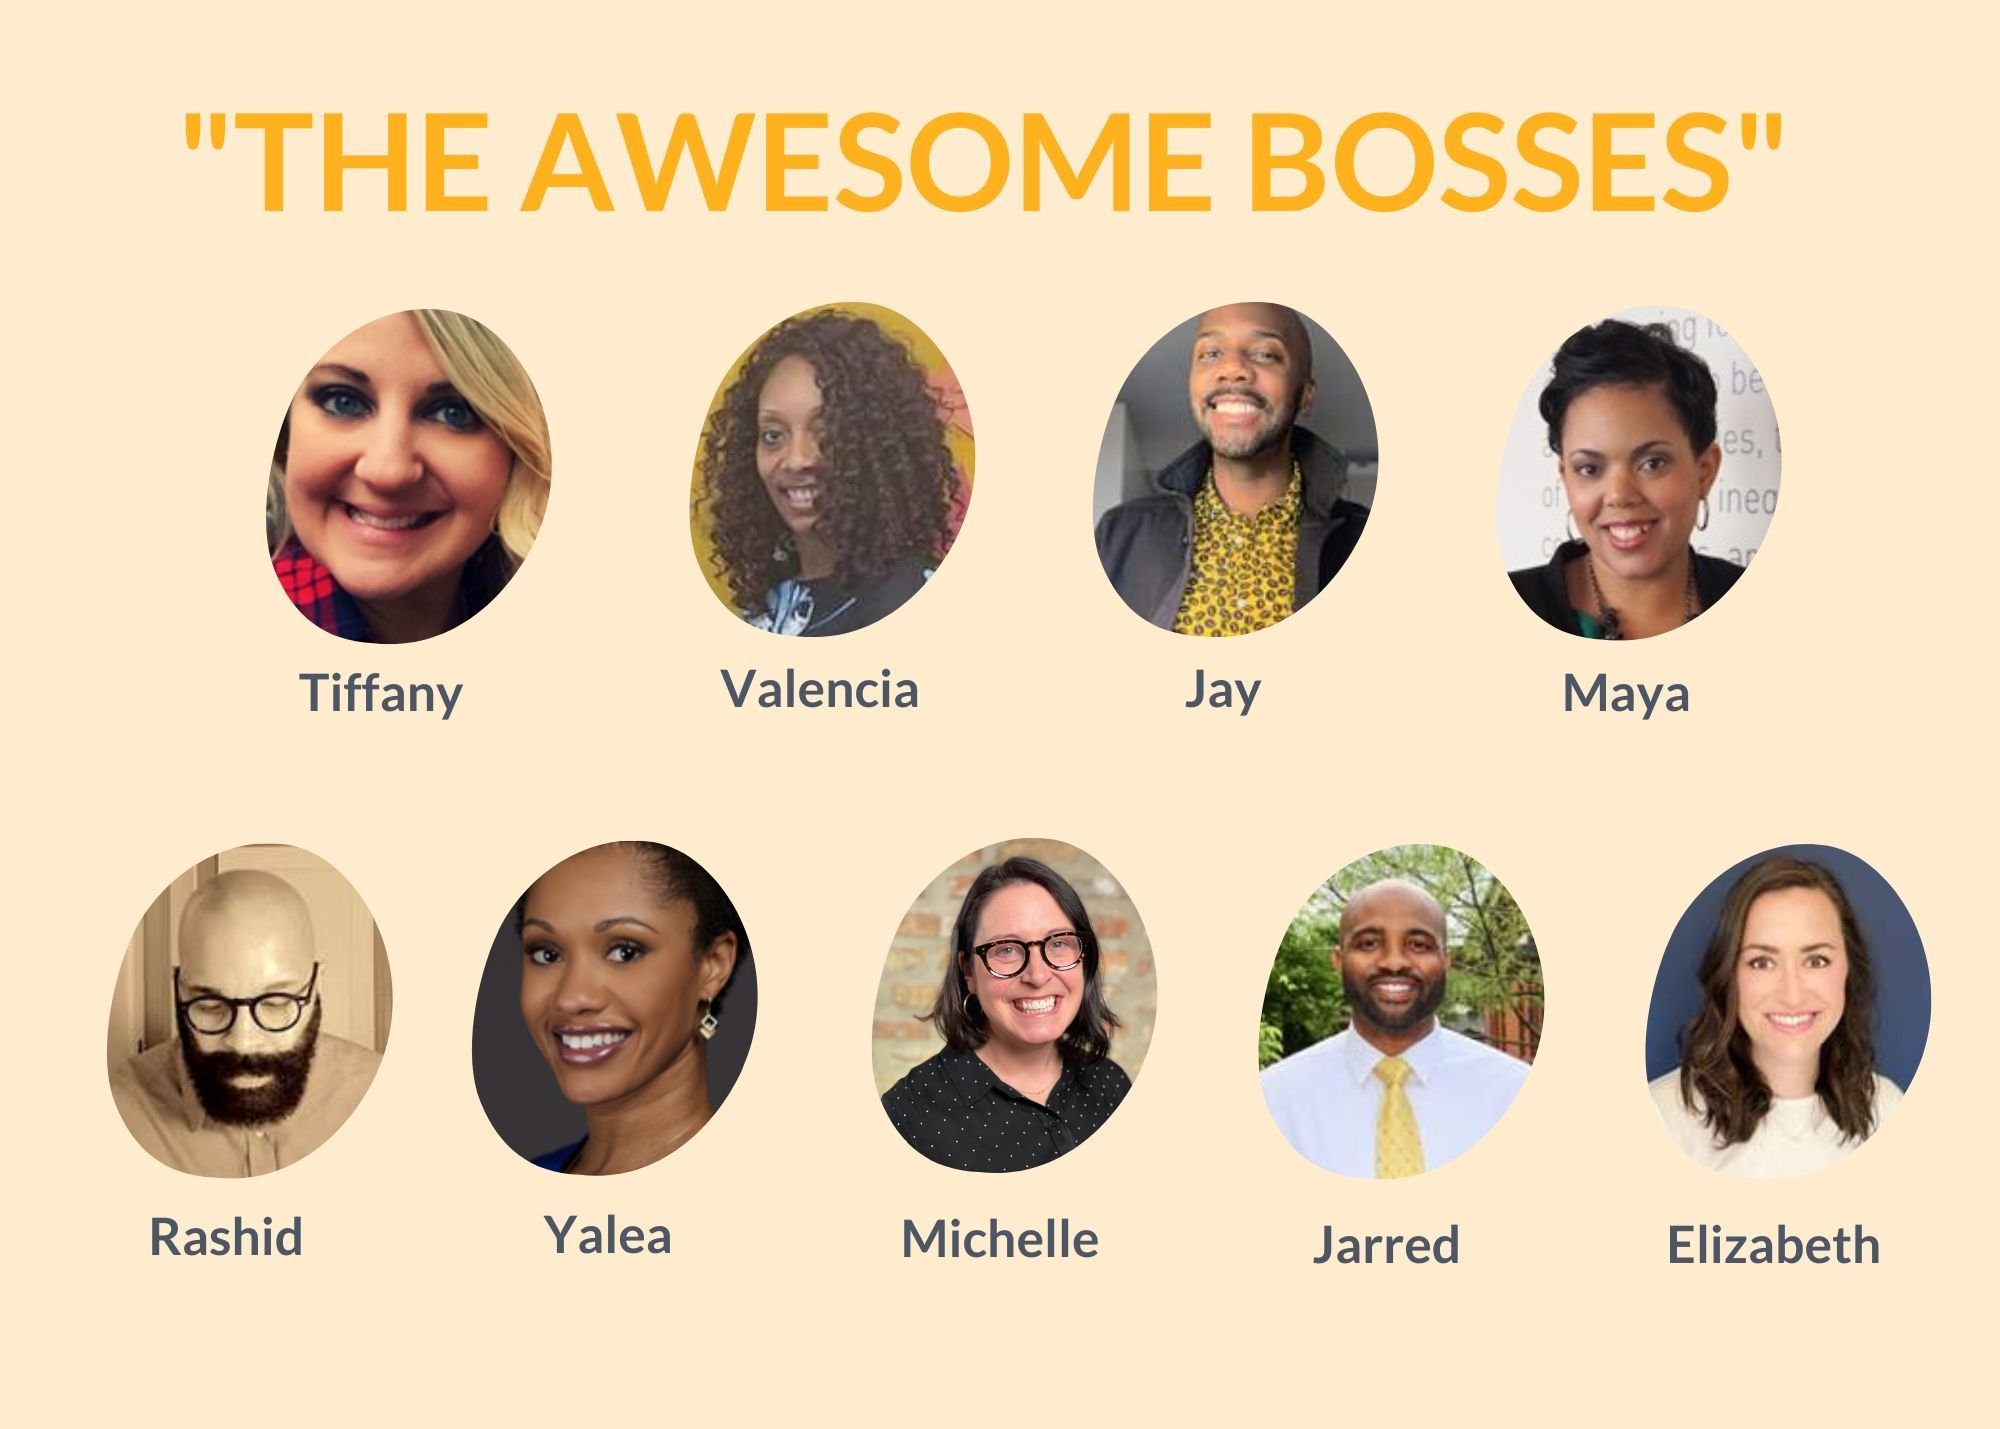 "The Awesome Bosses" with photos of Tiffany, Valencia, Jay, Maya, Rashid, Yalea, Michelle, Jarred and Elizabeth